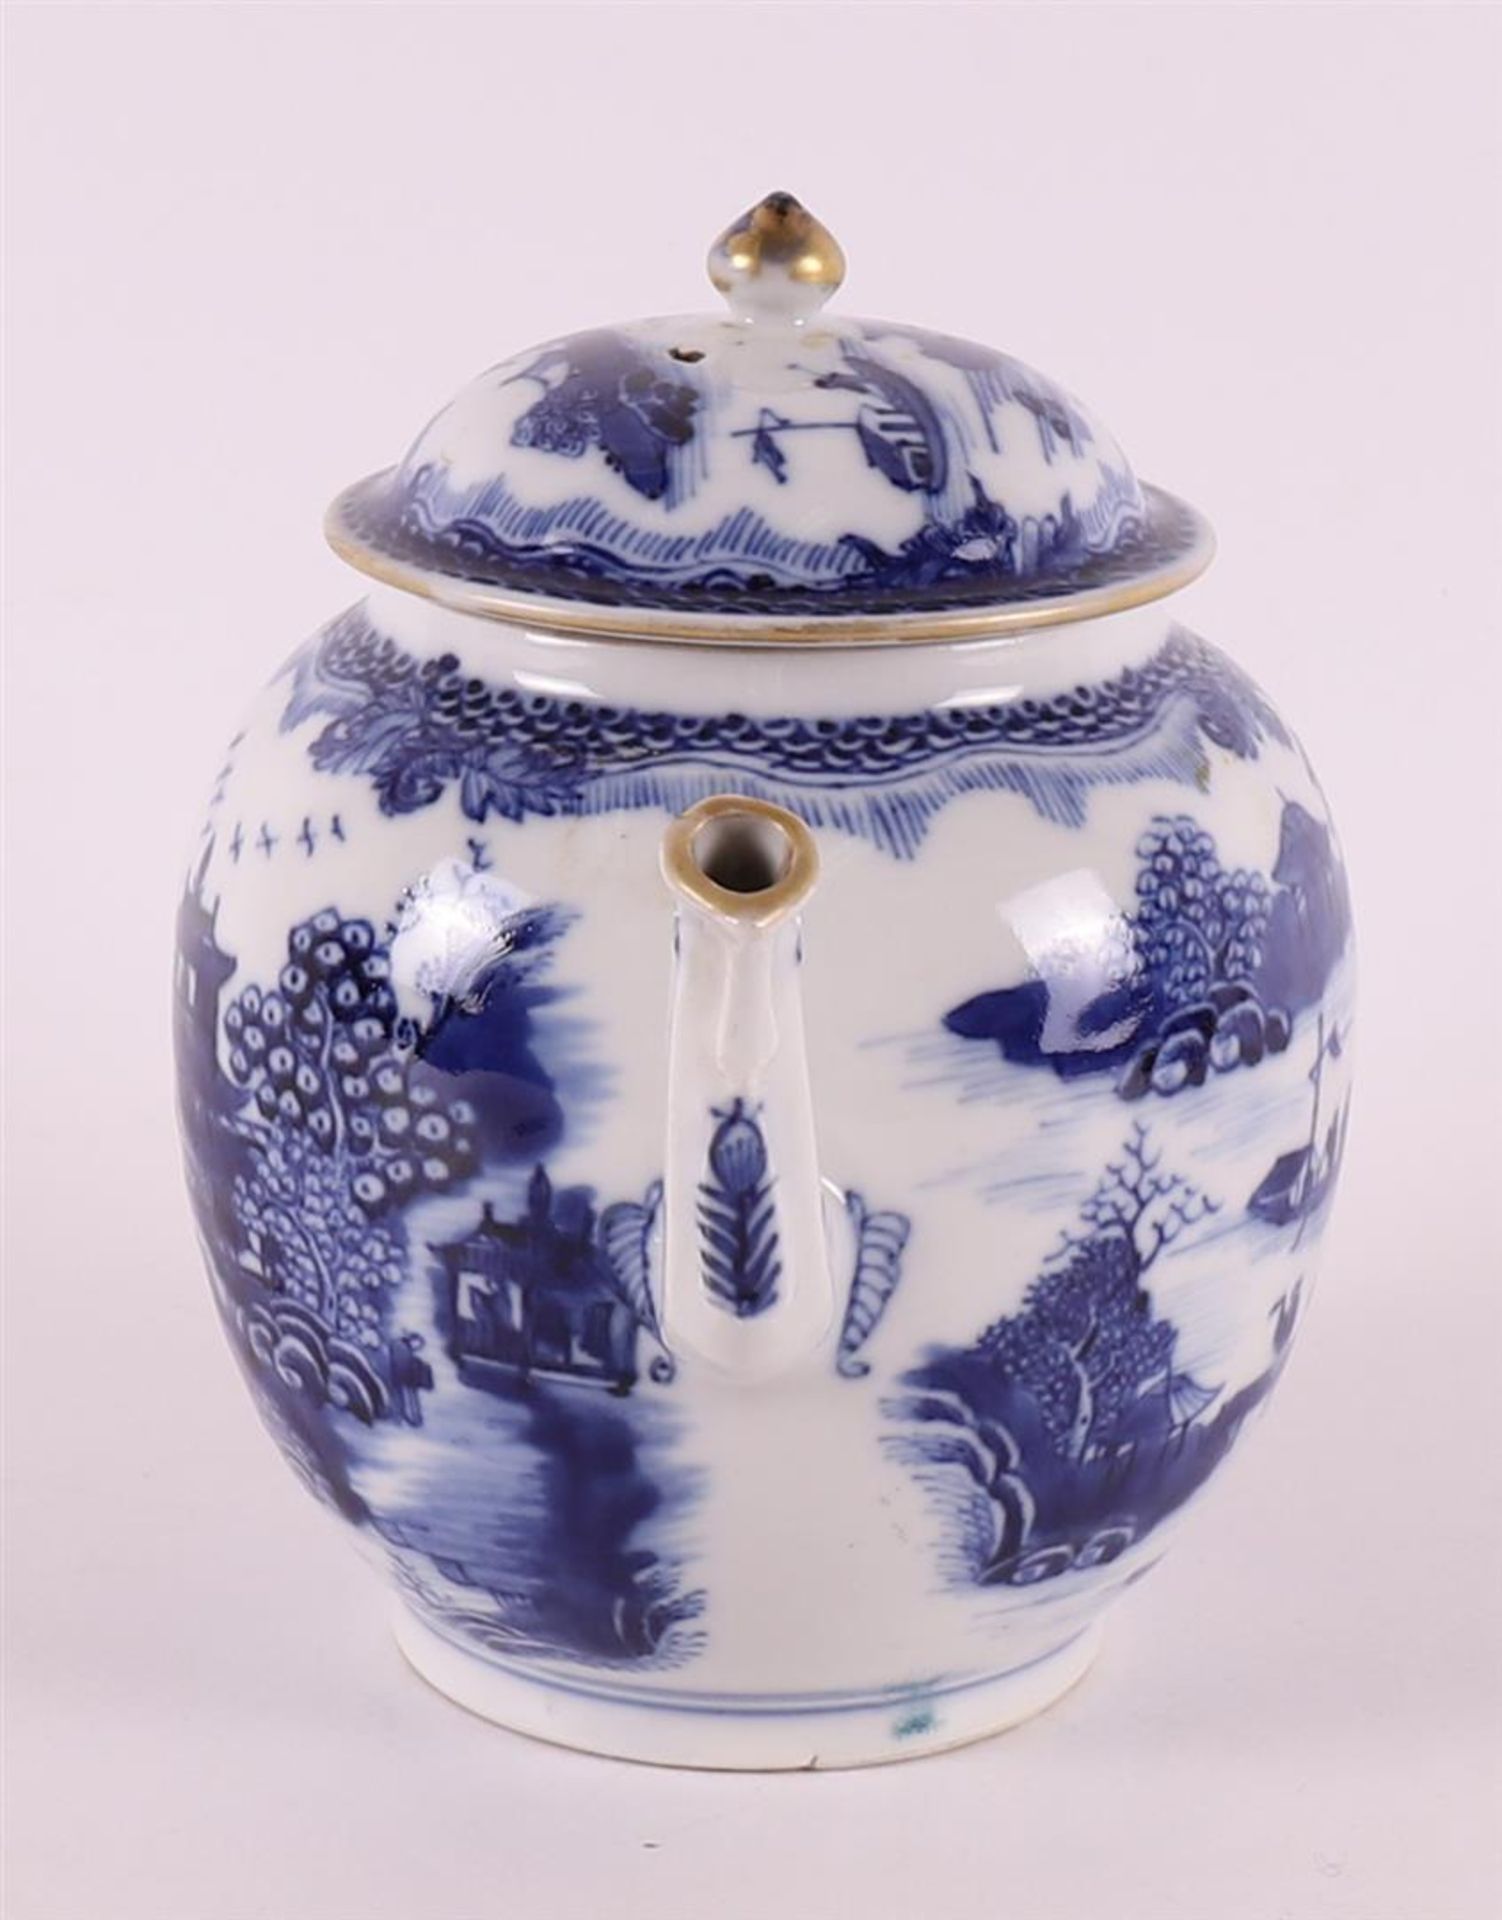 A blue/white porcelain Lowestoft teapot, England 18th century. - Image 4 of 8